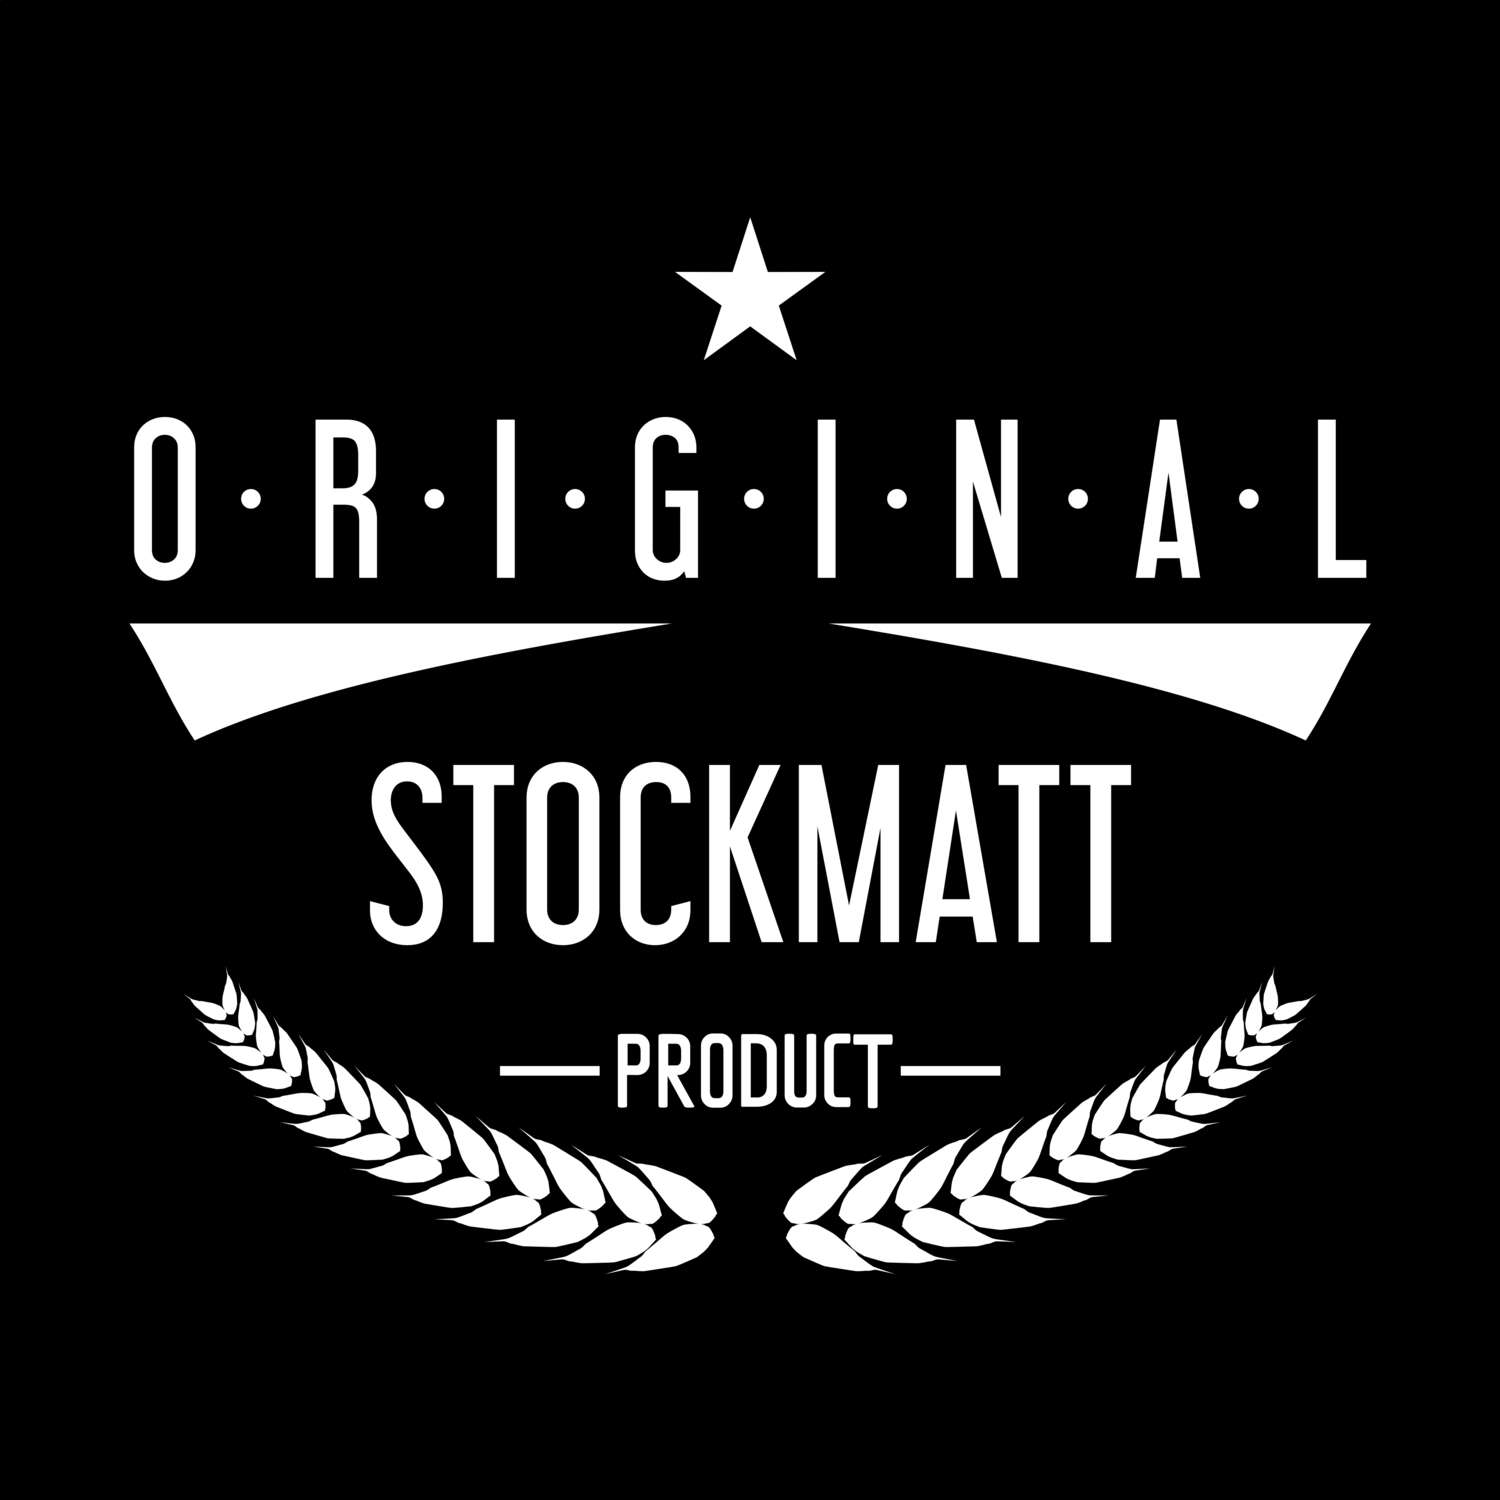 Stockmatt T-Shirt »Original Product«